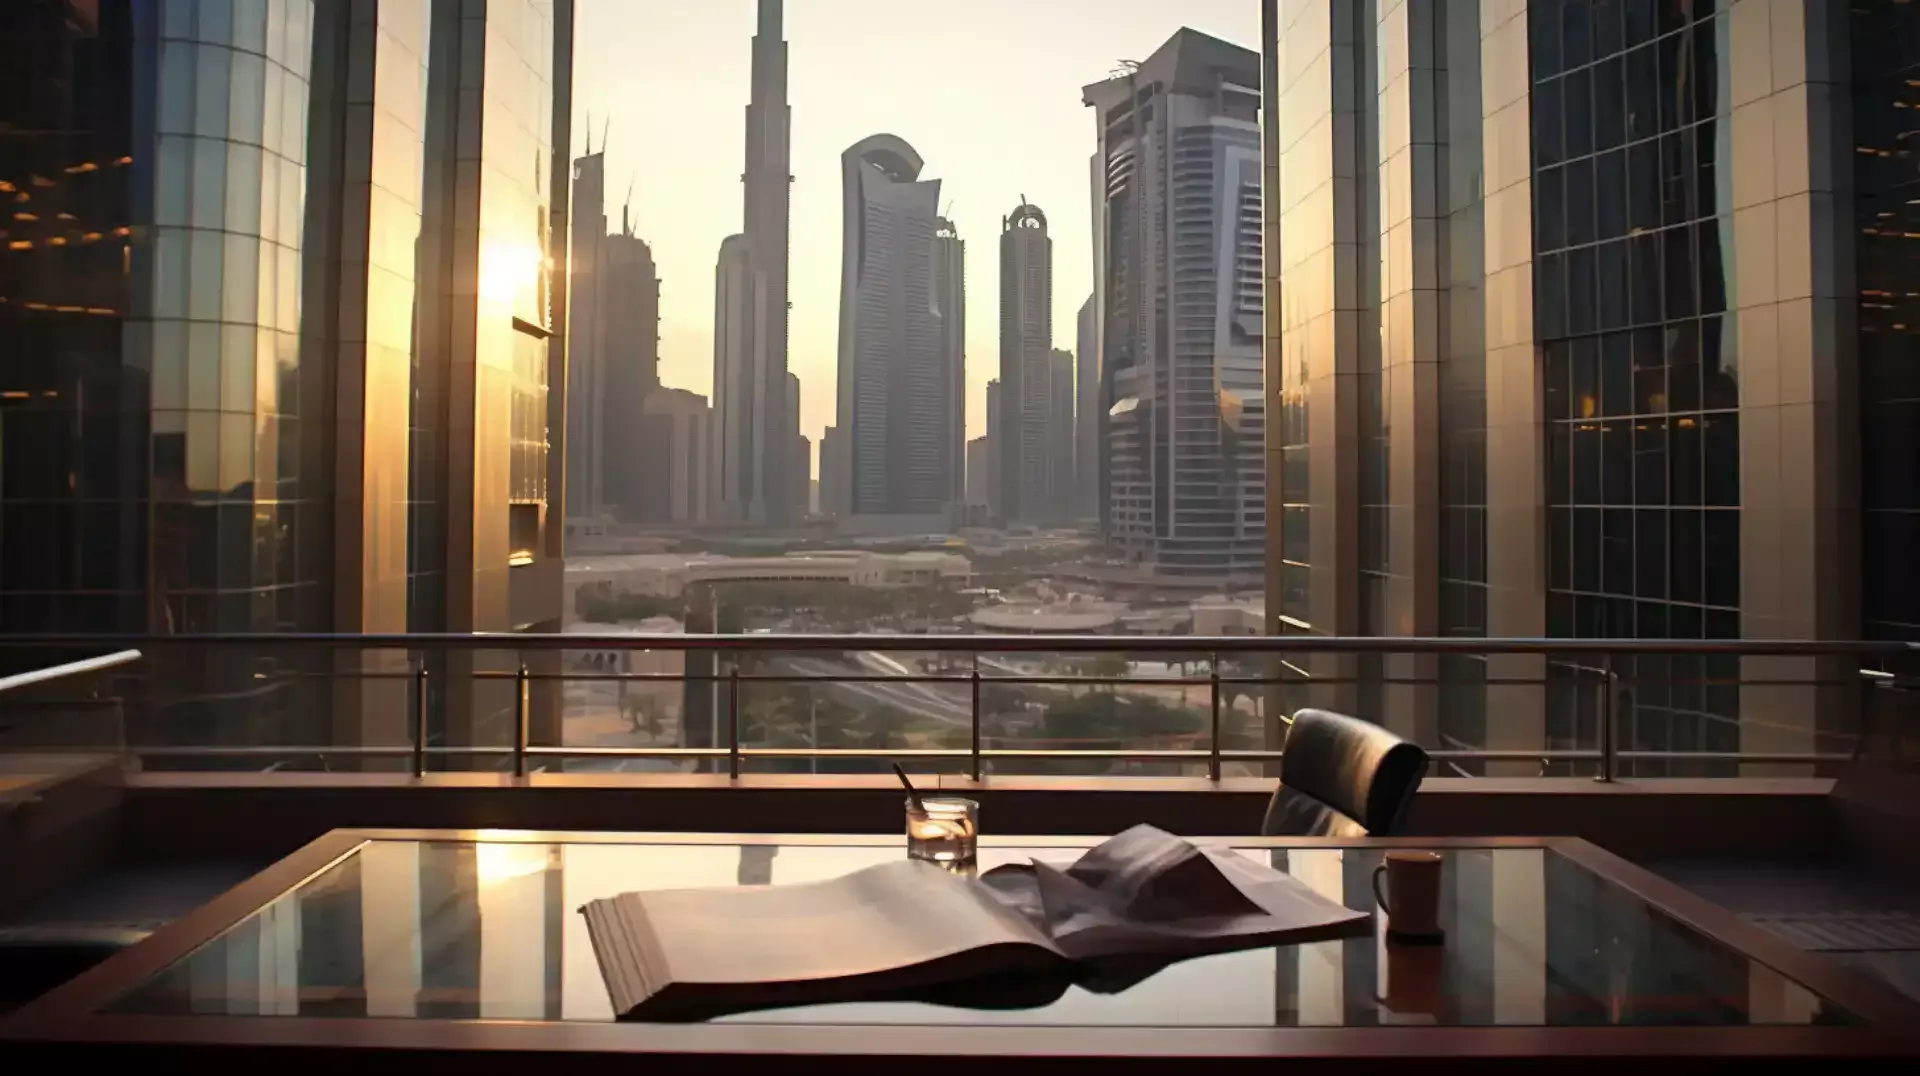 Image illustrating the procedure for establishing a company in Dubai